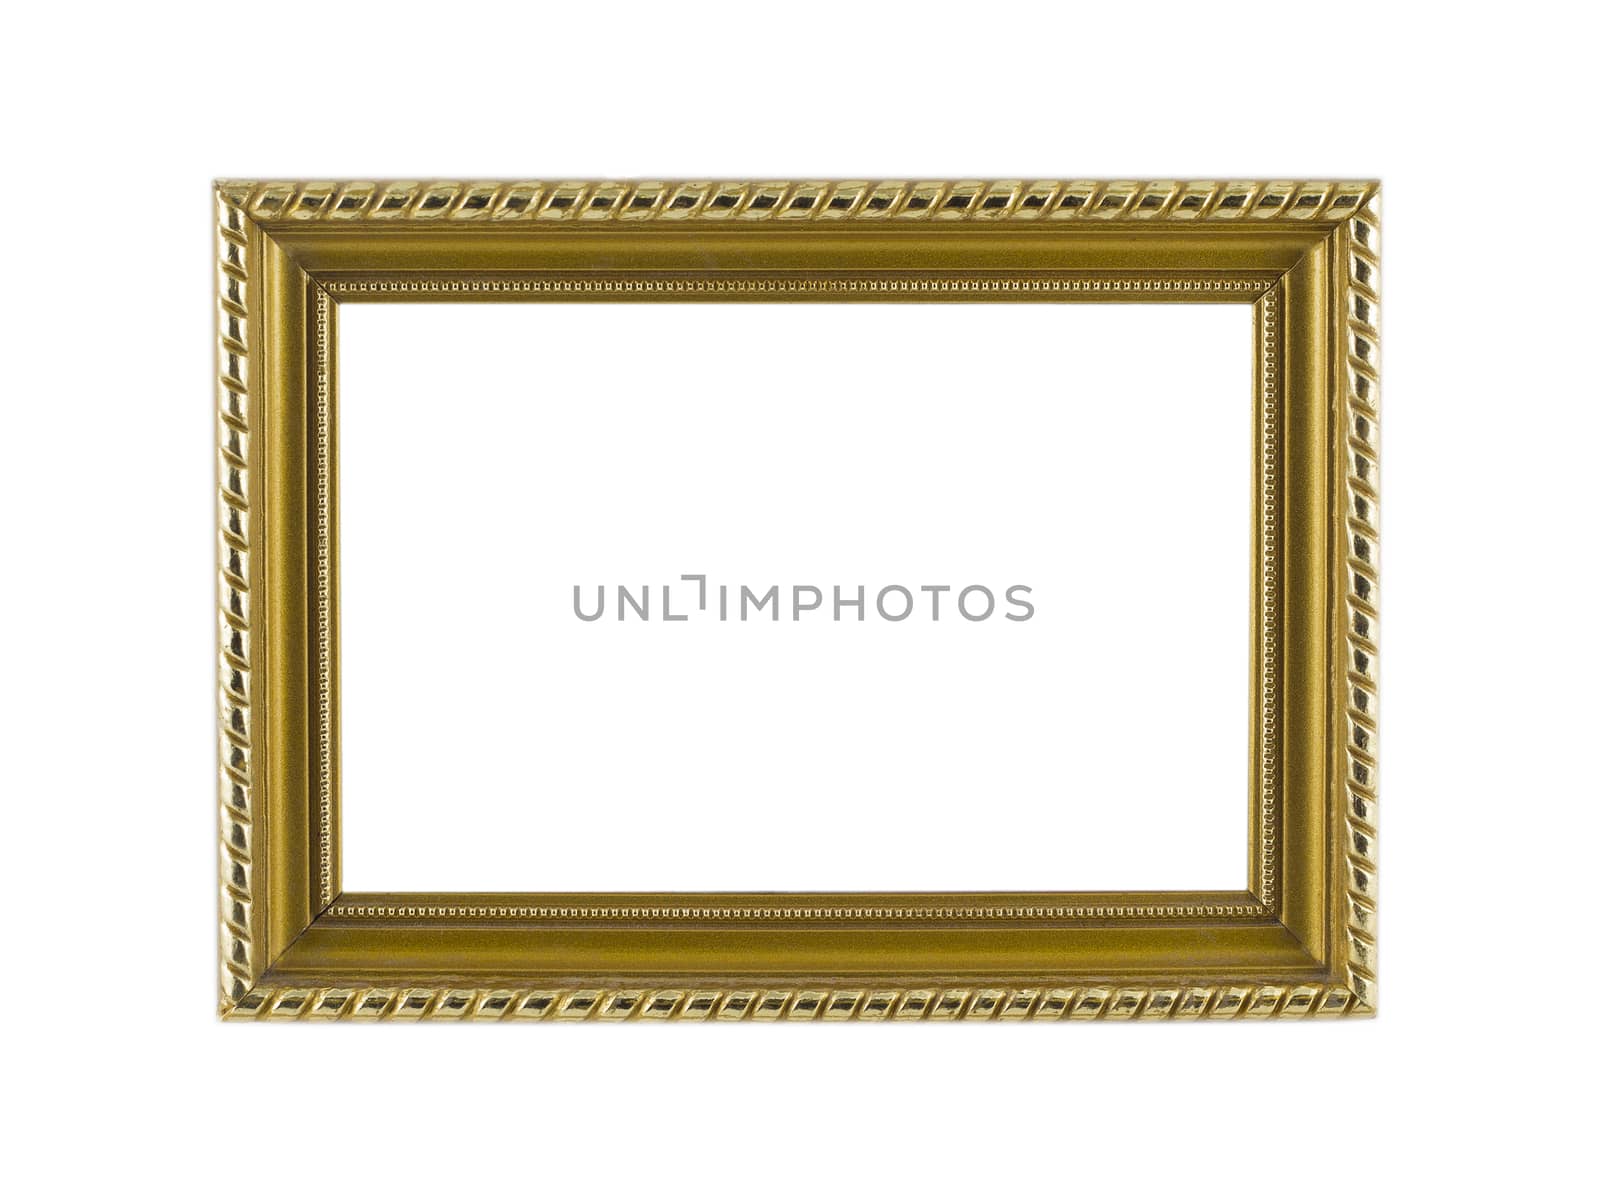 Golden Frame isolated on white background.